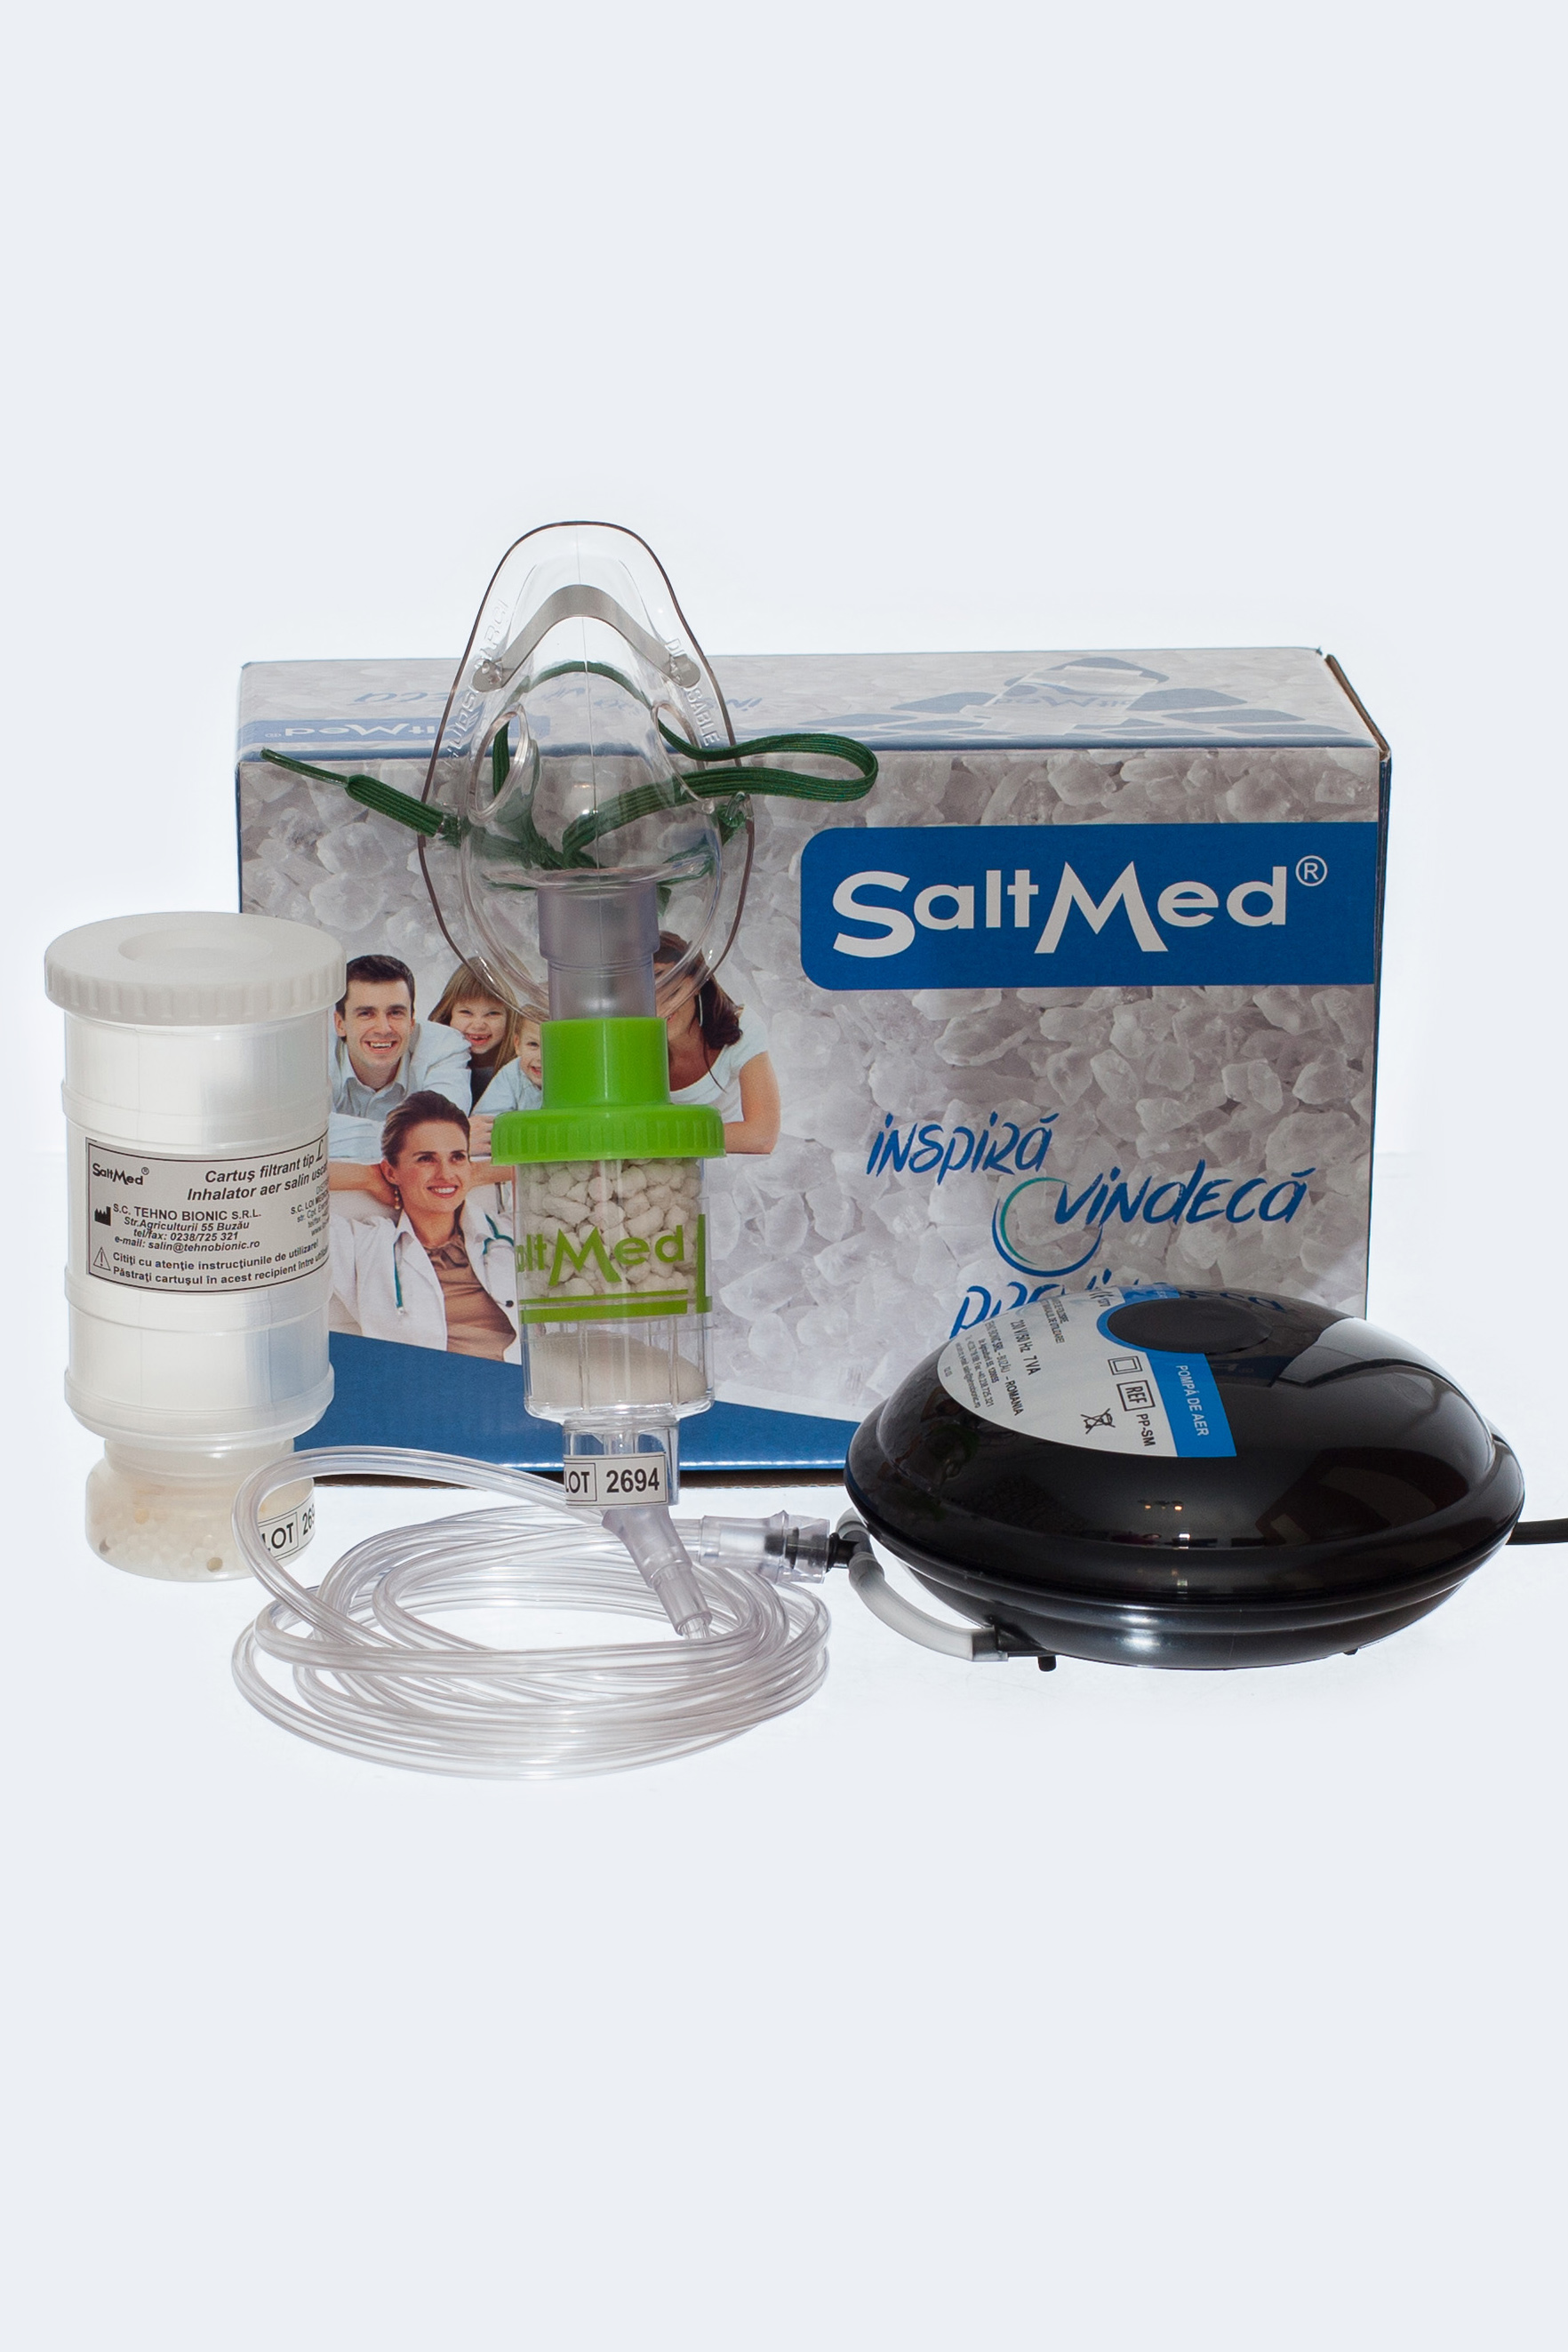 Components of the SaltMed saline inhalator